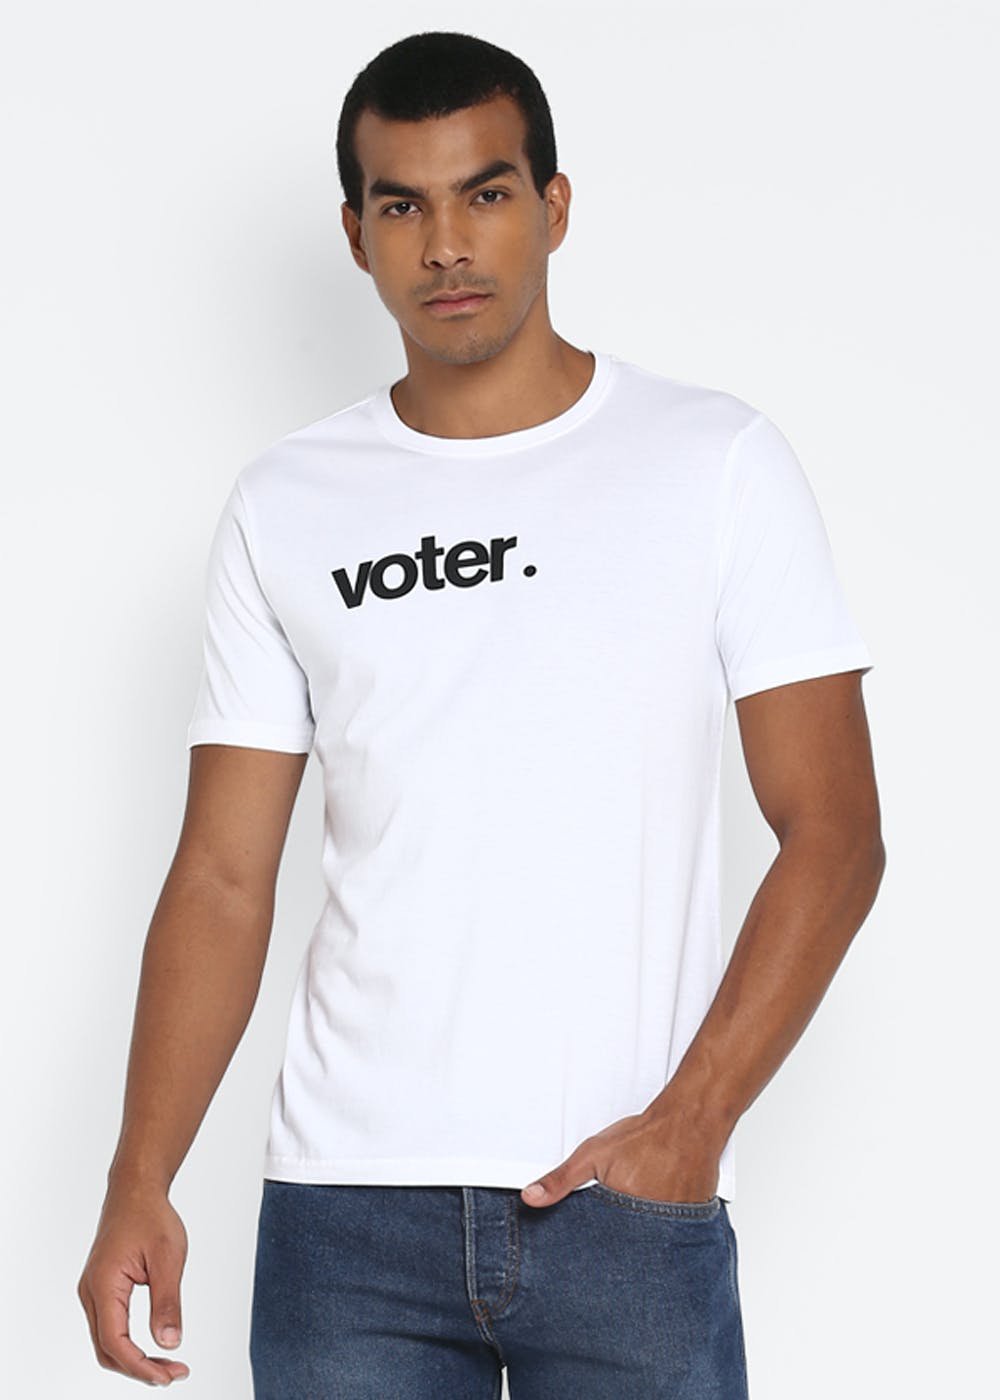 "Voter" Short Sleeve Round Neck Tshirt